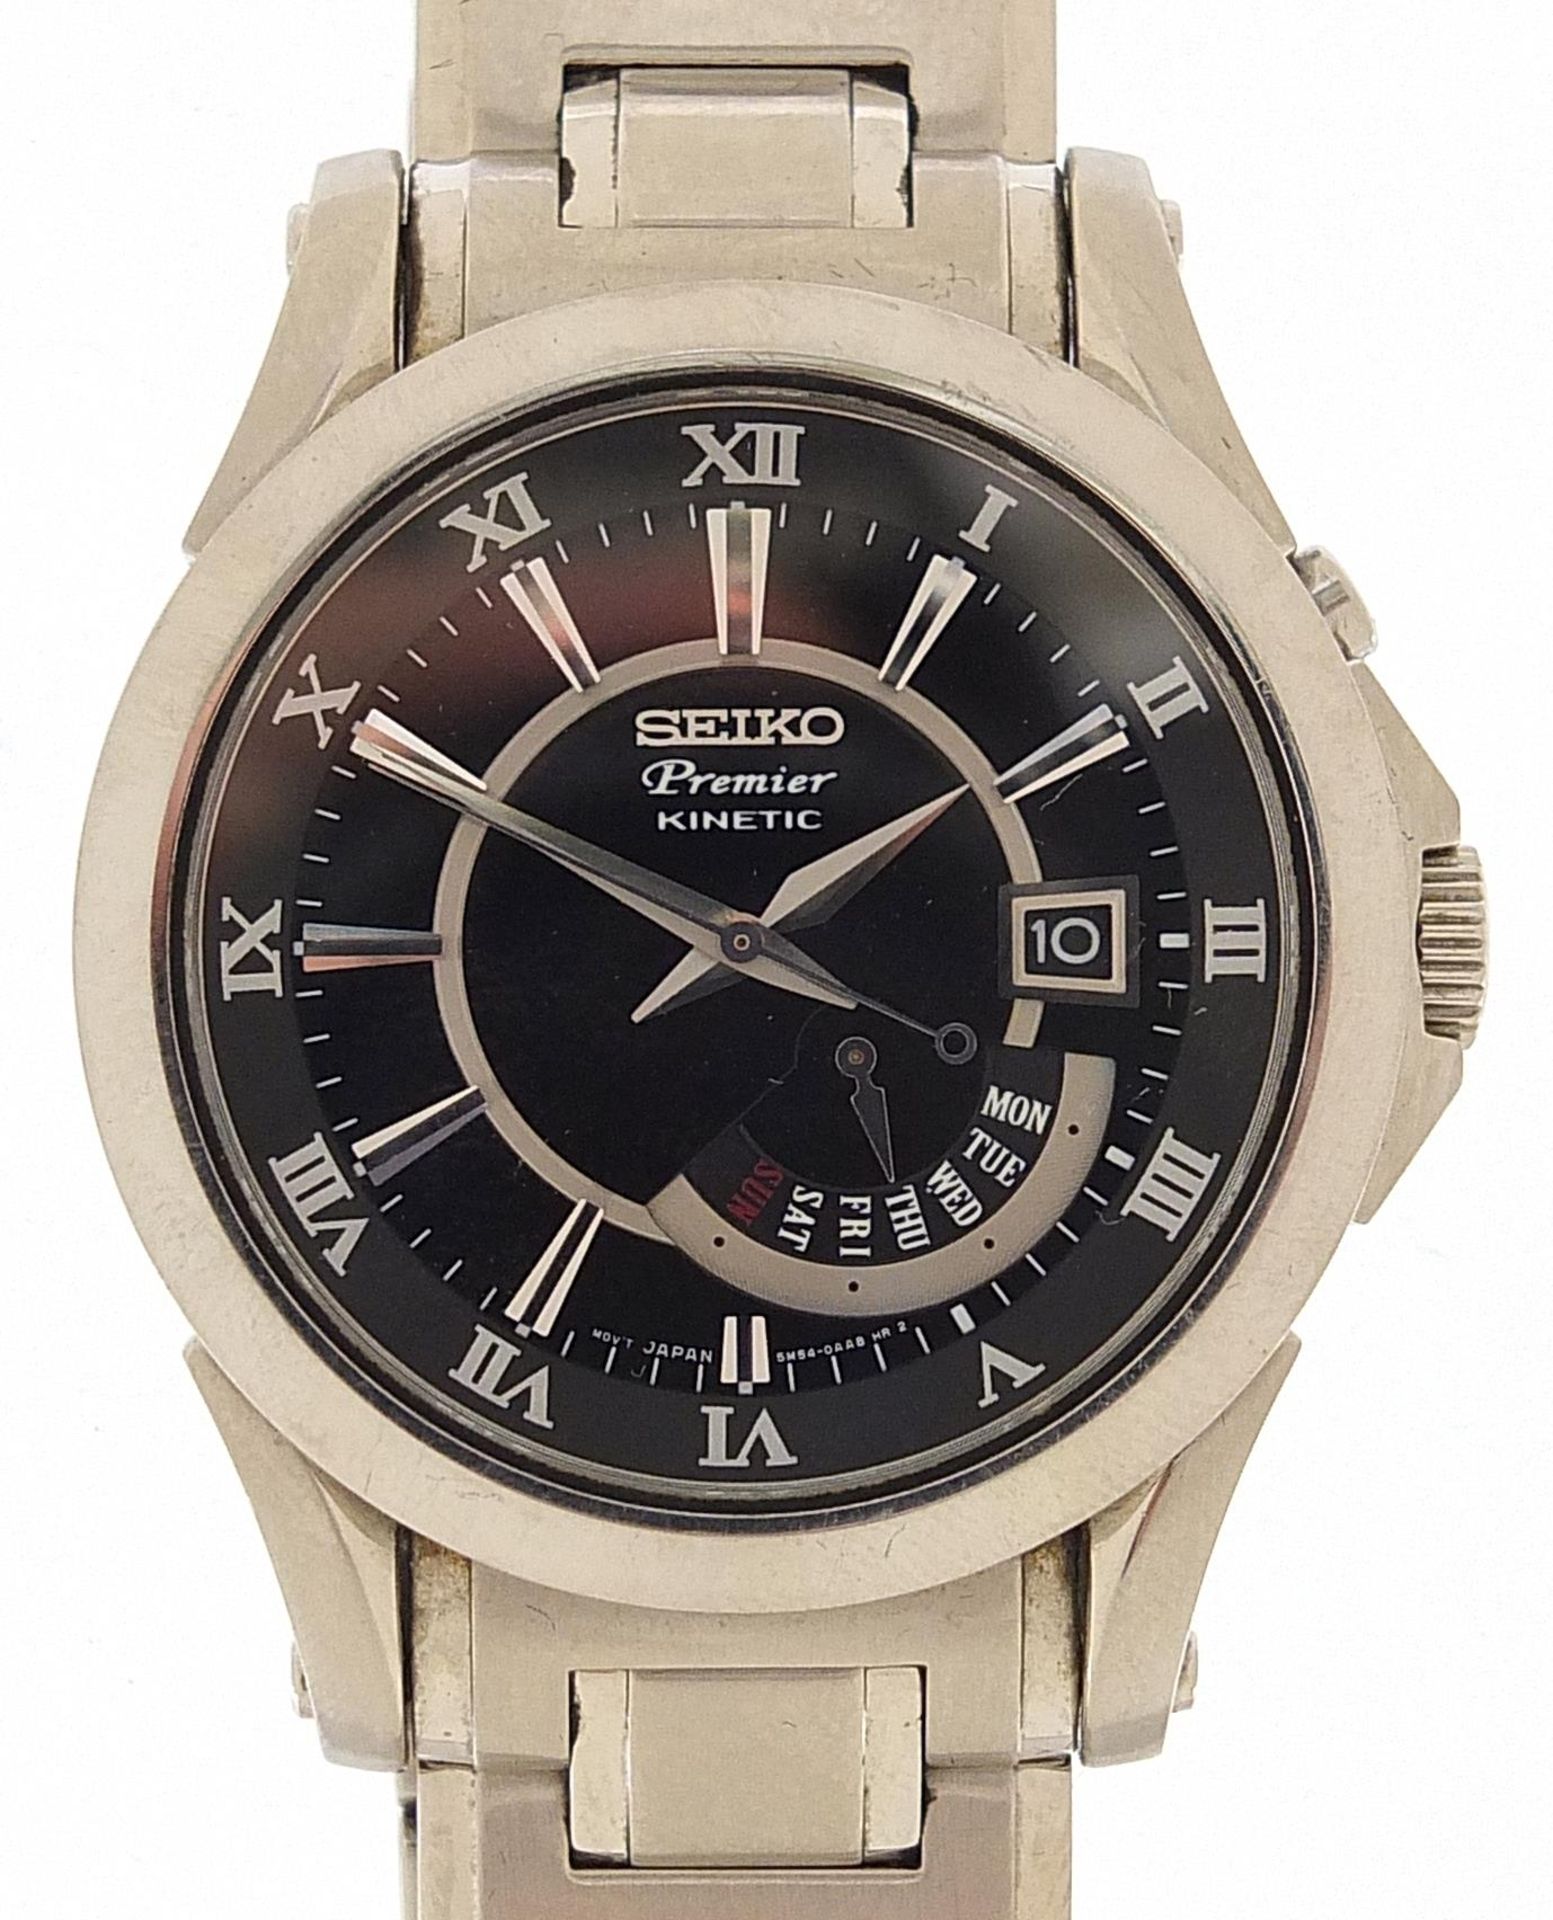 Seiko, gentlemen's Seiko Premier kinetic wristwatch with date aperture with box and original receipt